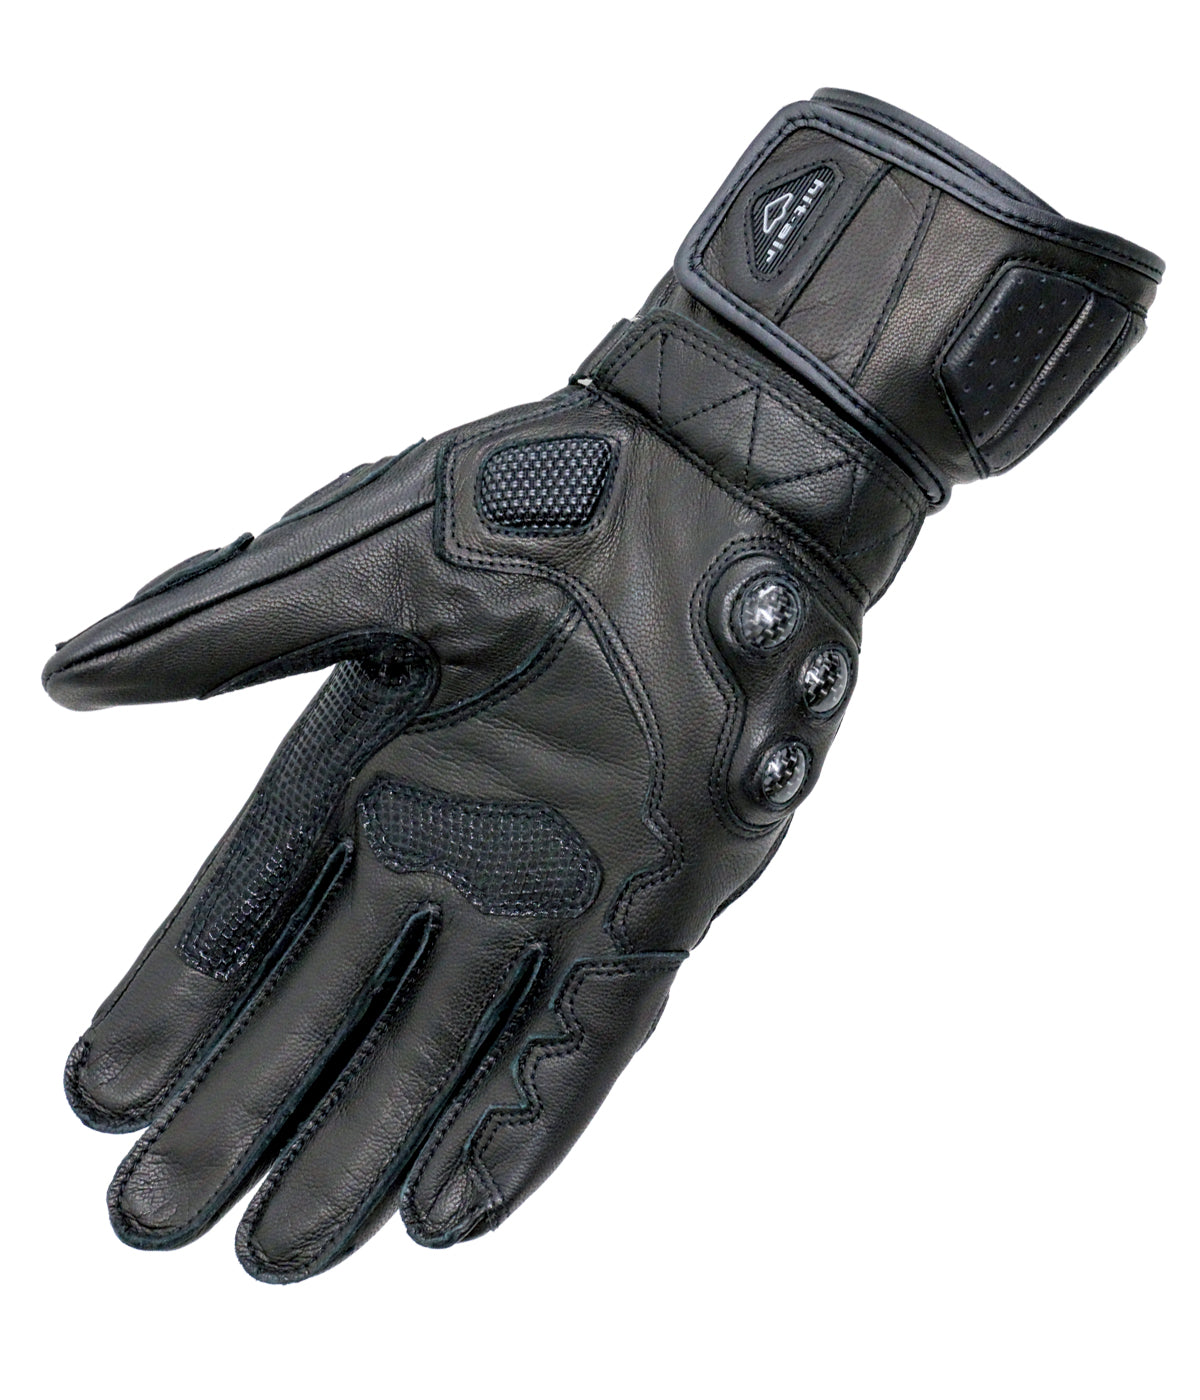 R3 Gloves (Sports model)